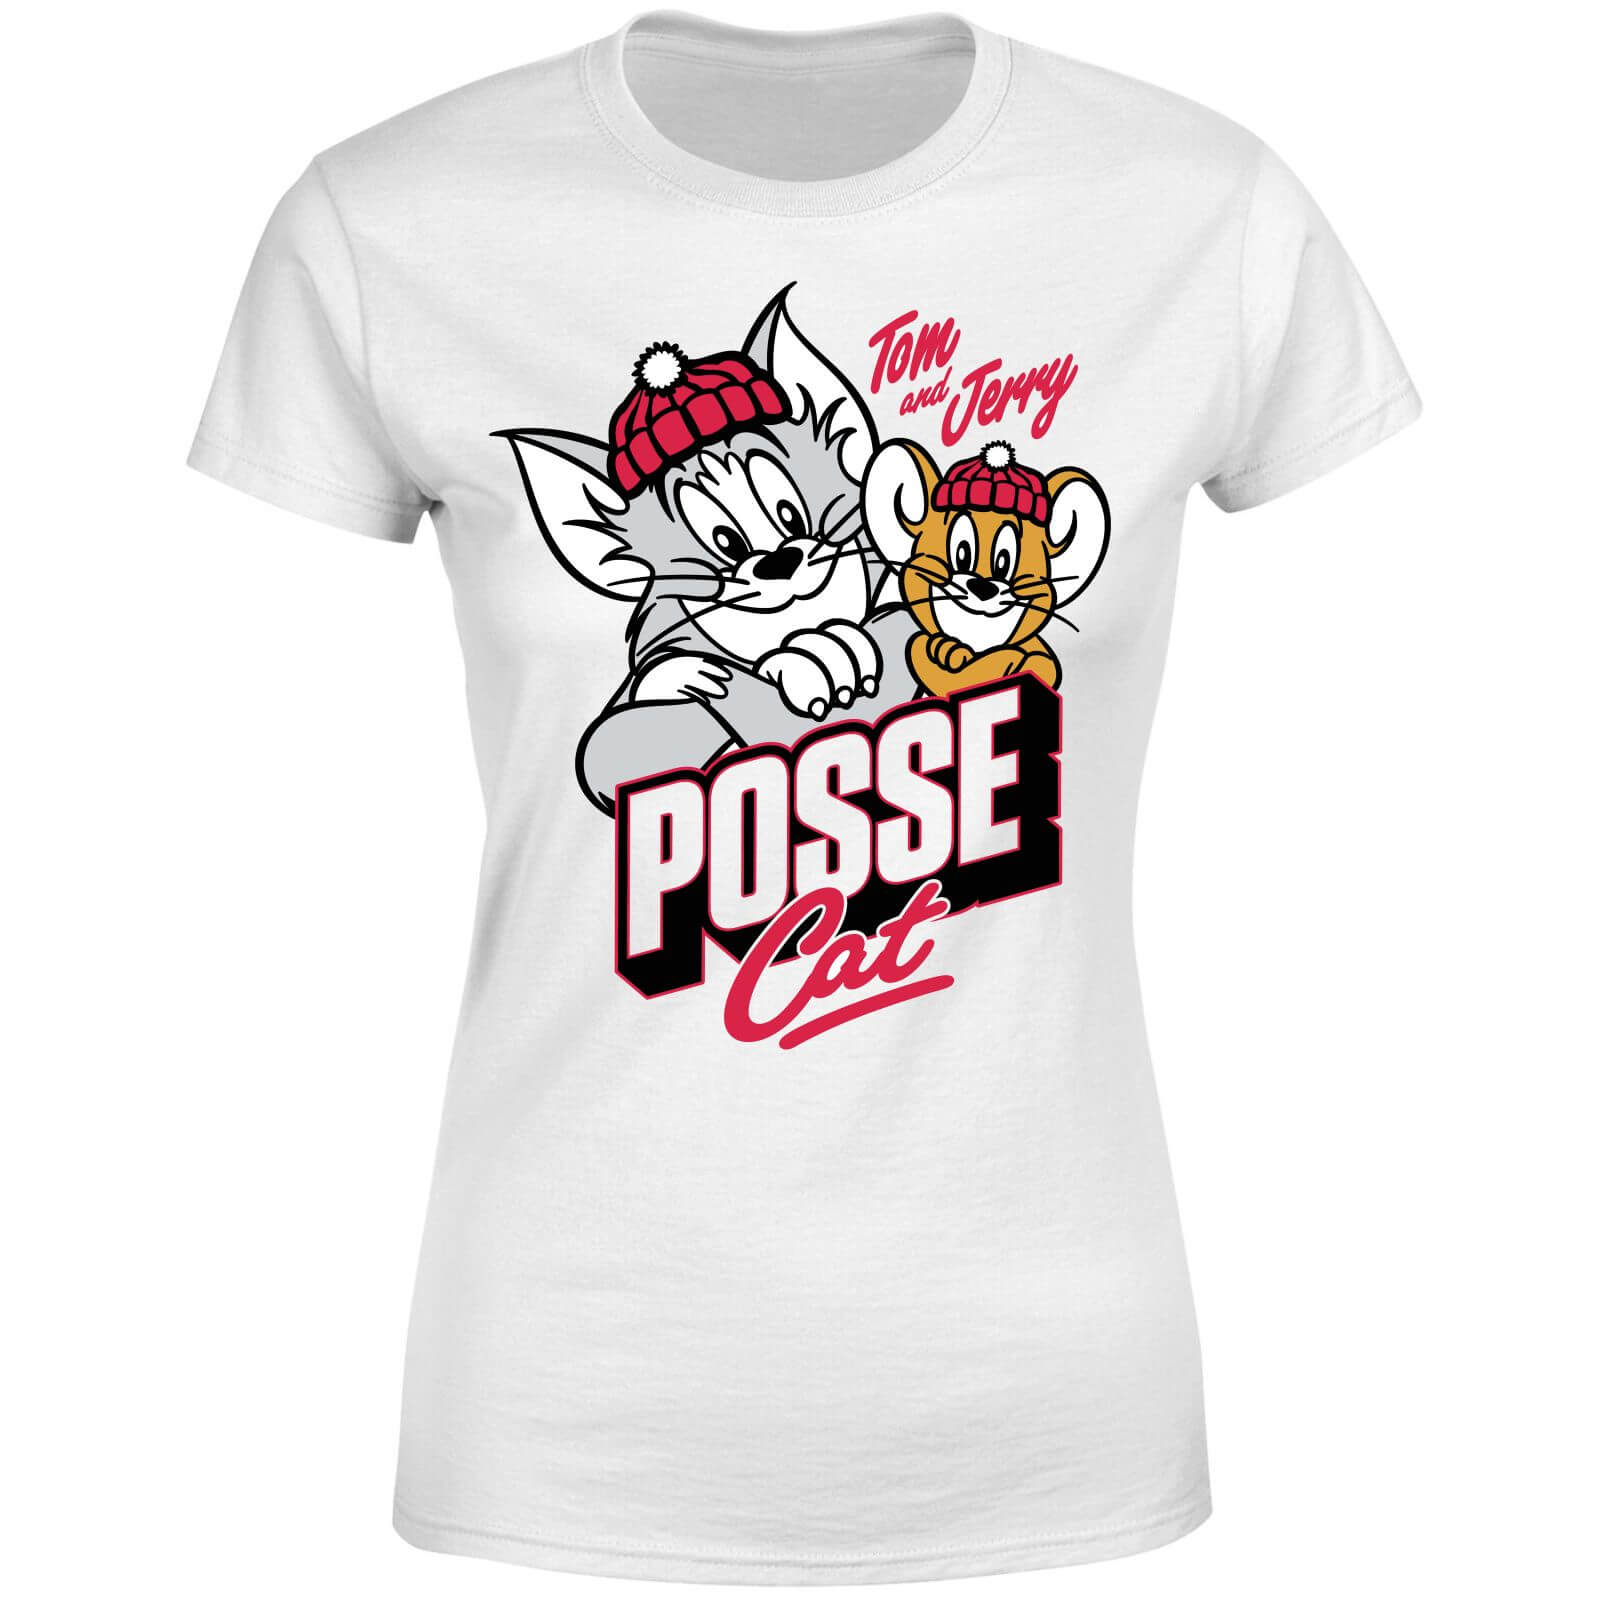 Tom & Jerry Posse Cat Women's T-Shirt - White - S - White